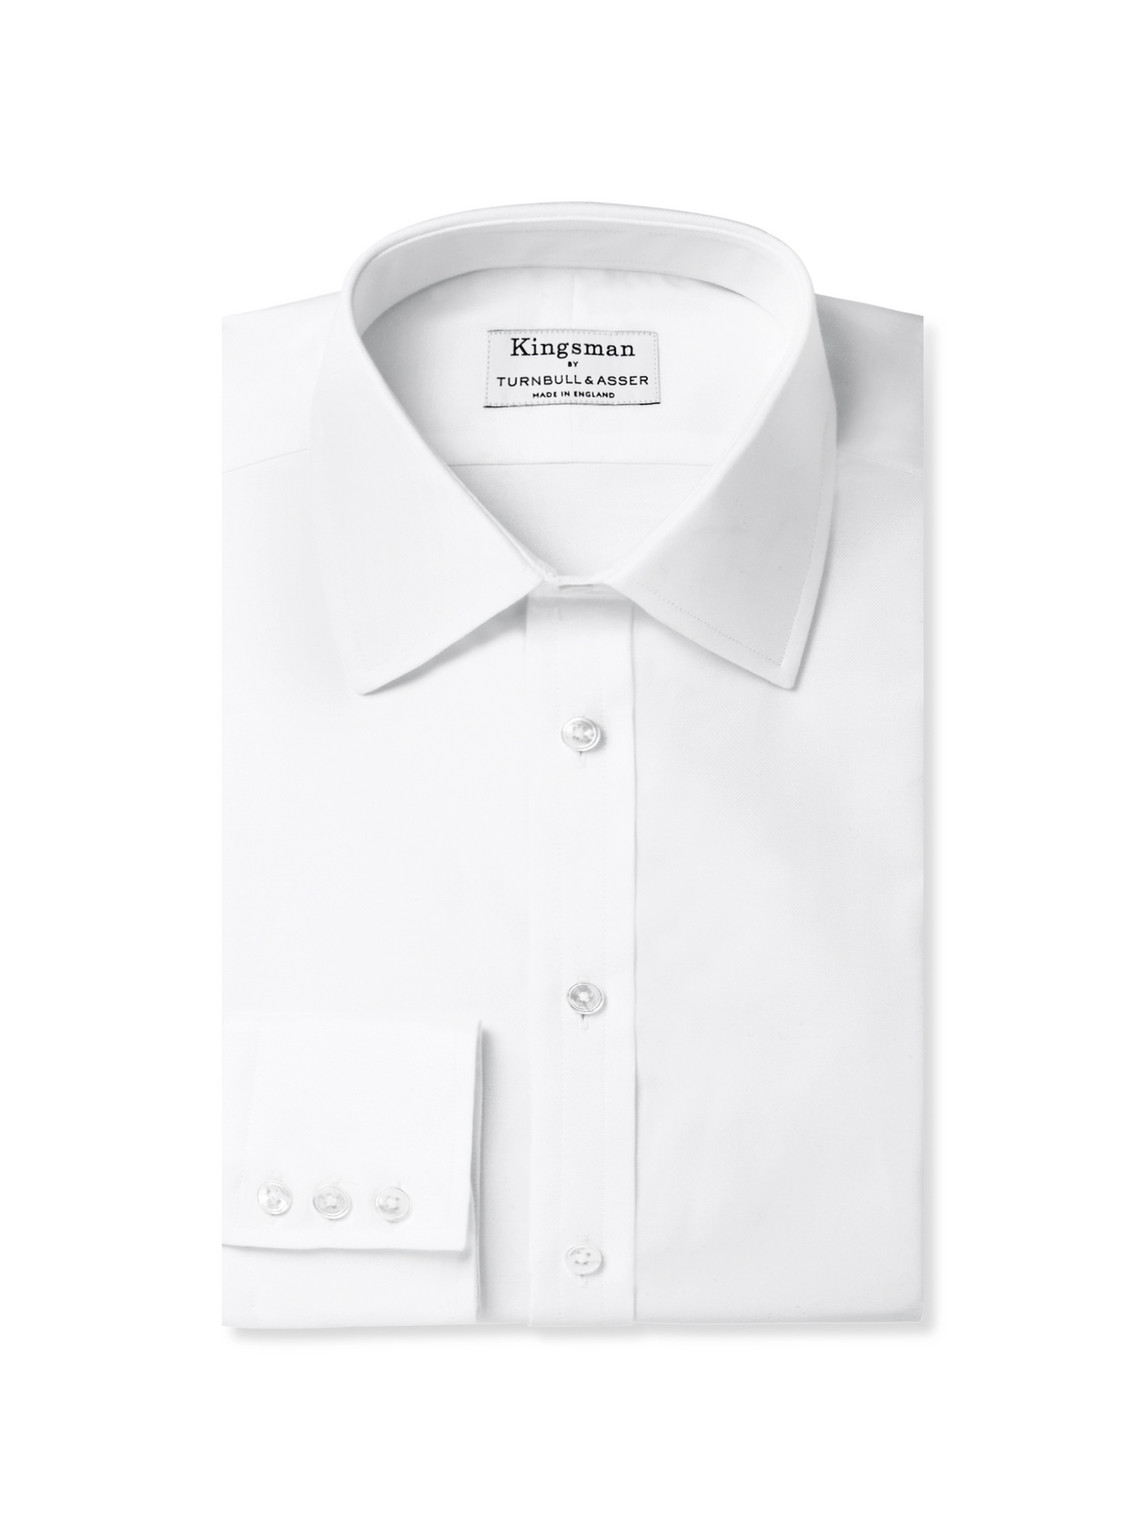 Kingsman Turnbull & Asser White Cotton Royal Oxford Shirt